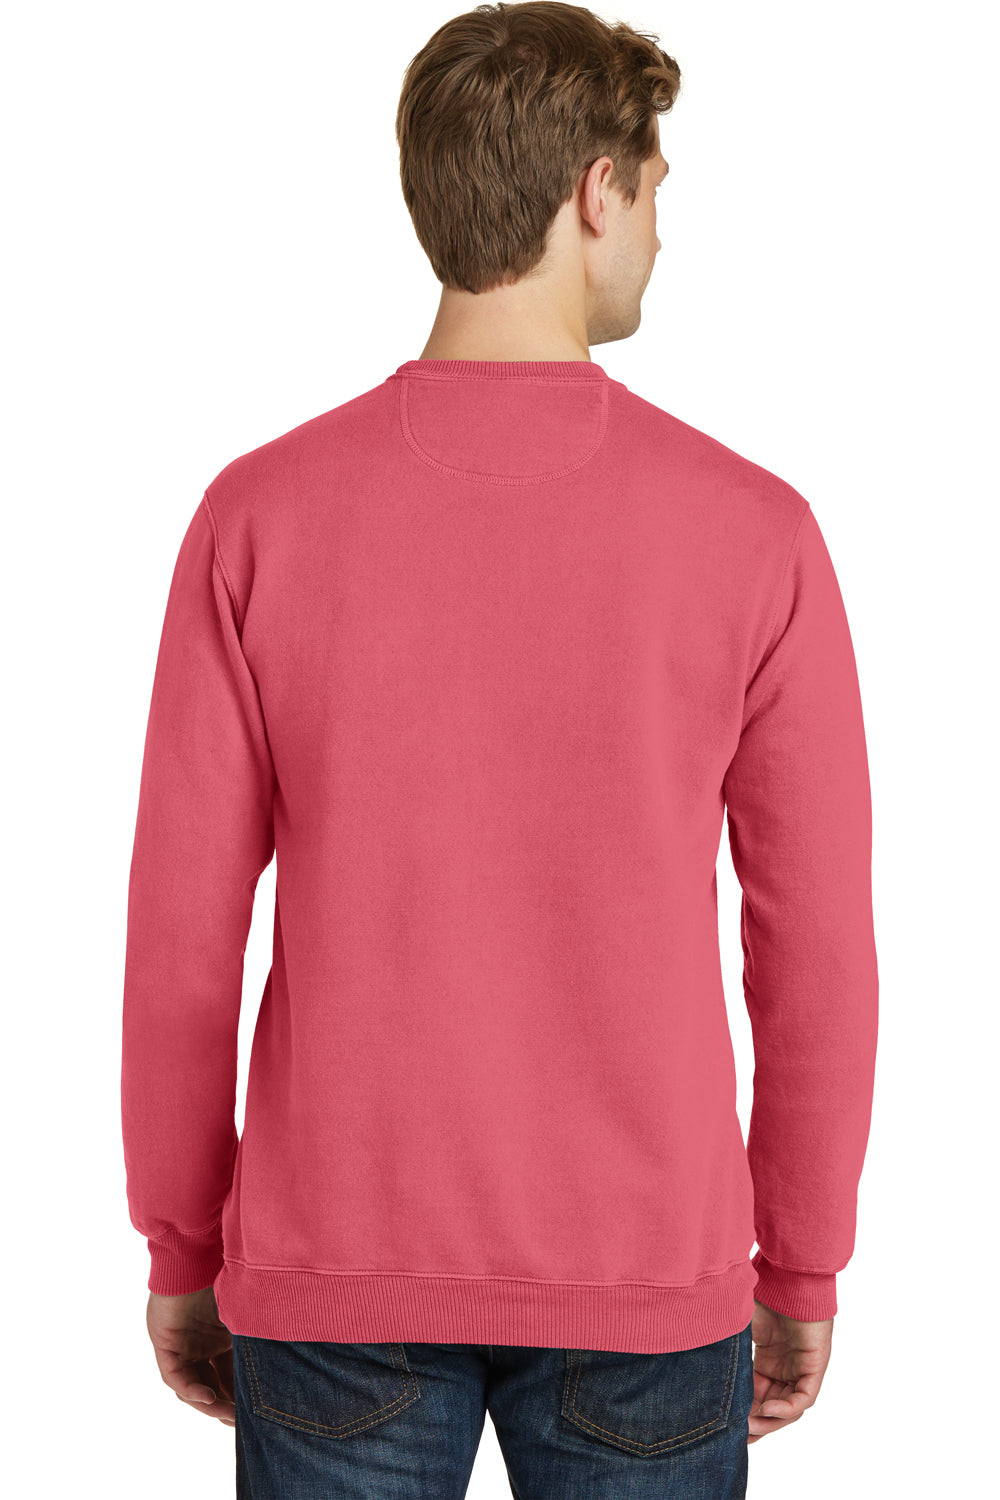 Port & Company PC098 Mens Beach Wash Fleece Crewneck Sweatshirt Fruit Punch Pink Back